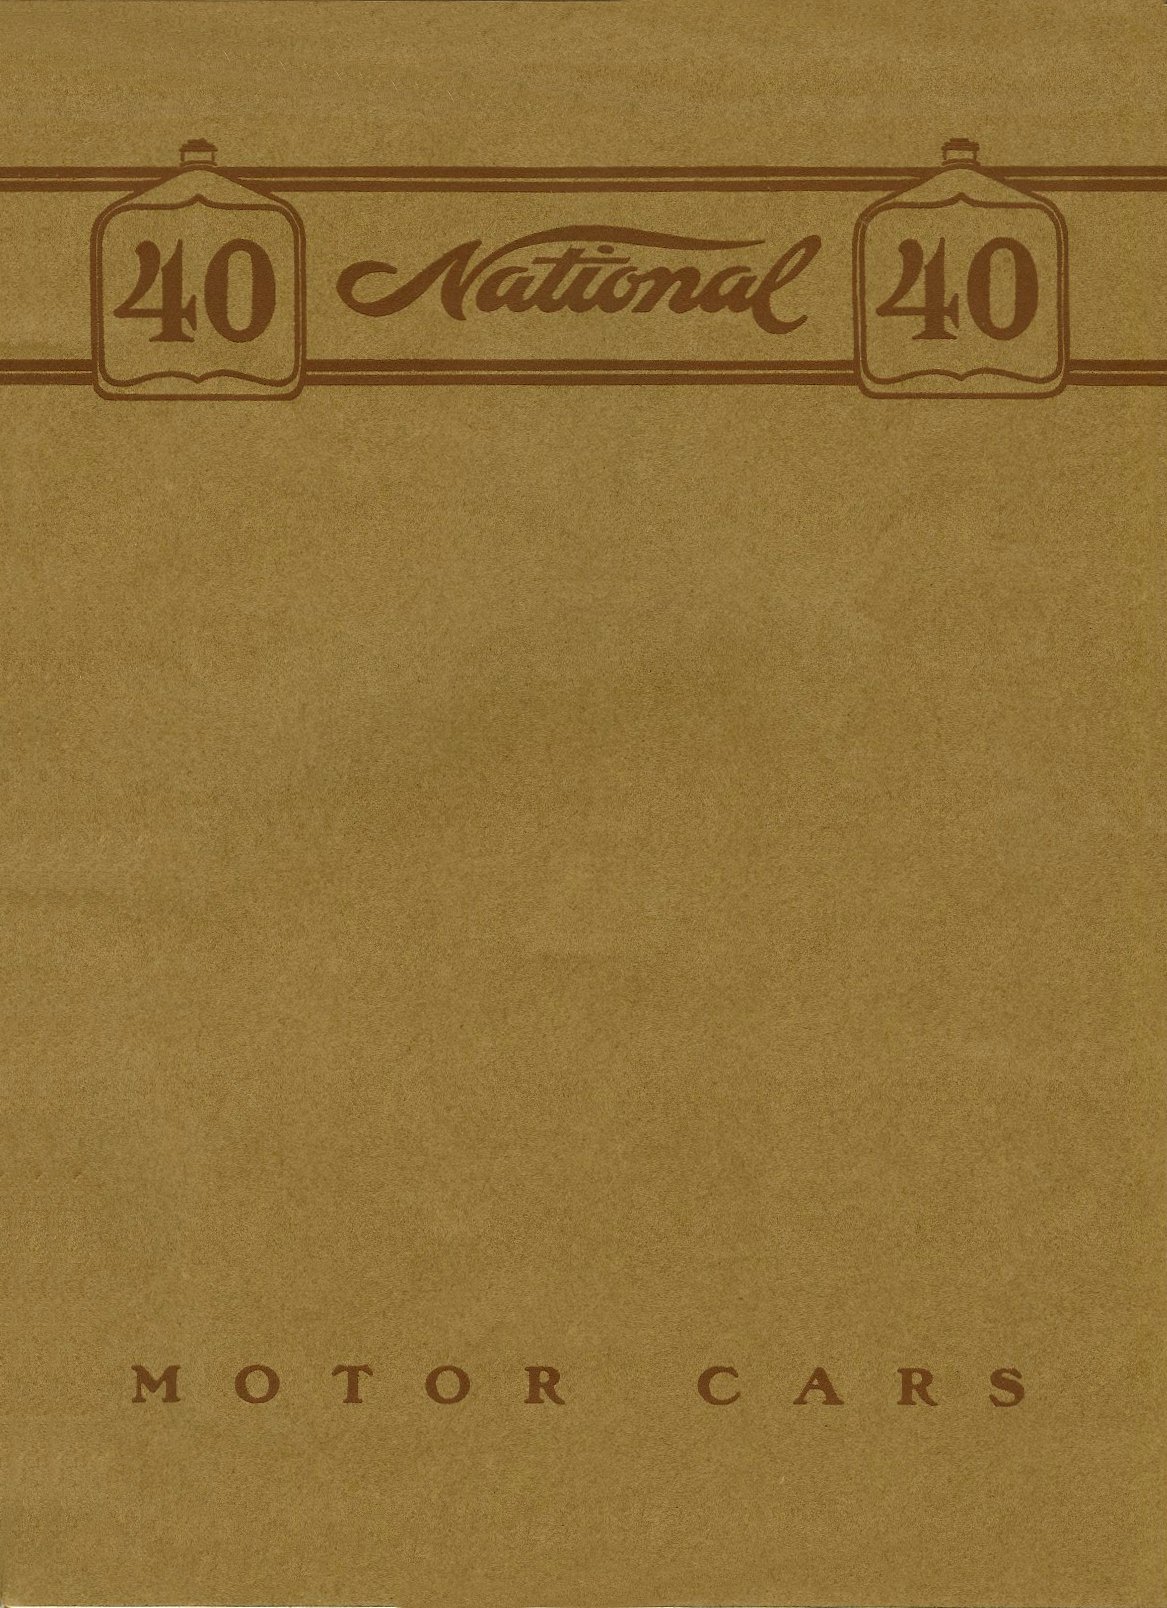 1911 National 40 Catalogue-00c